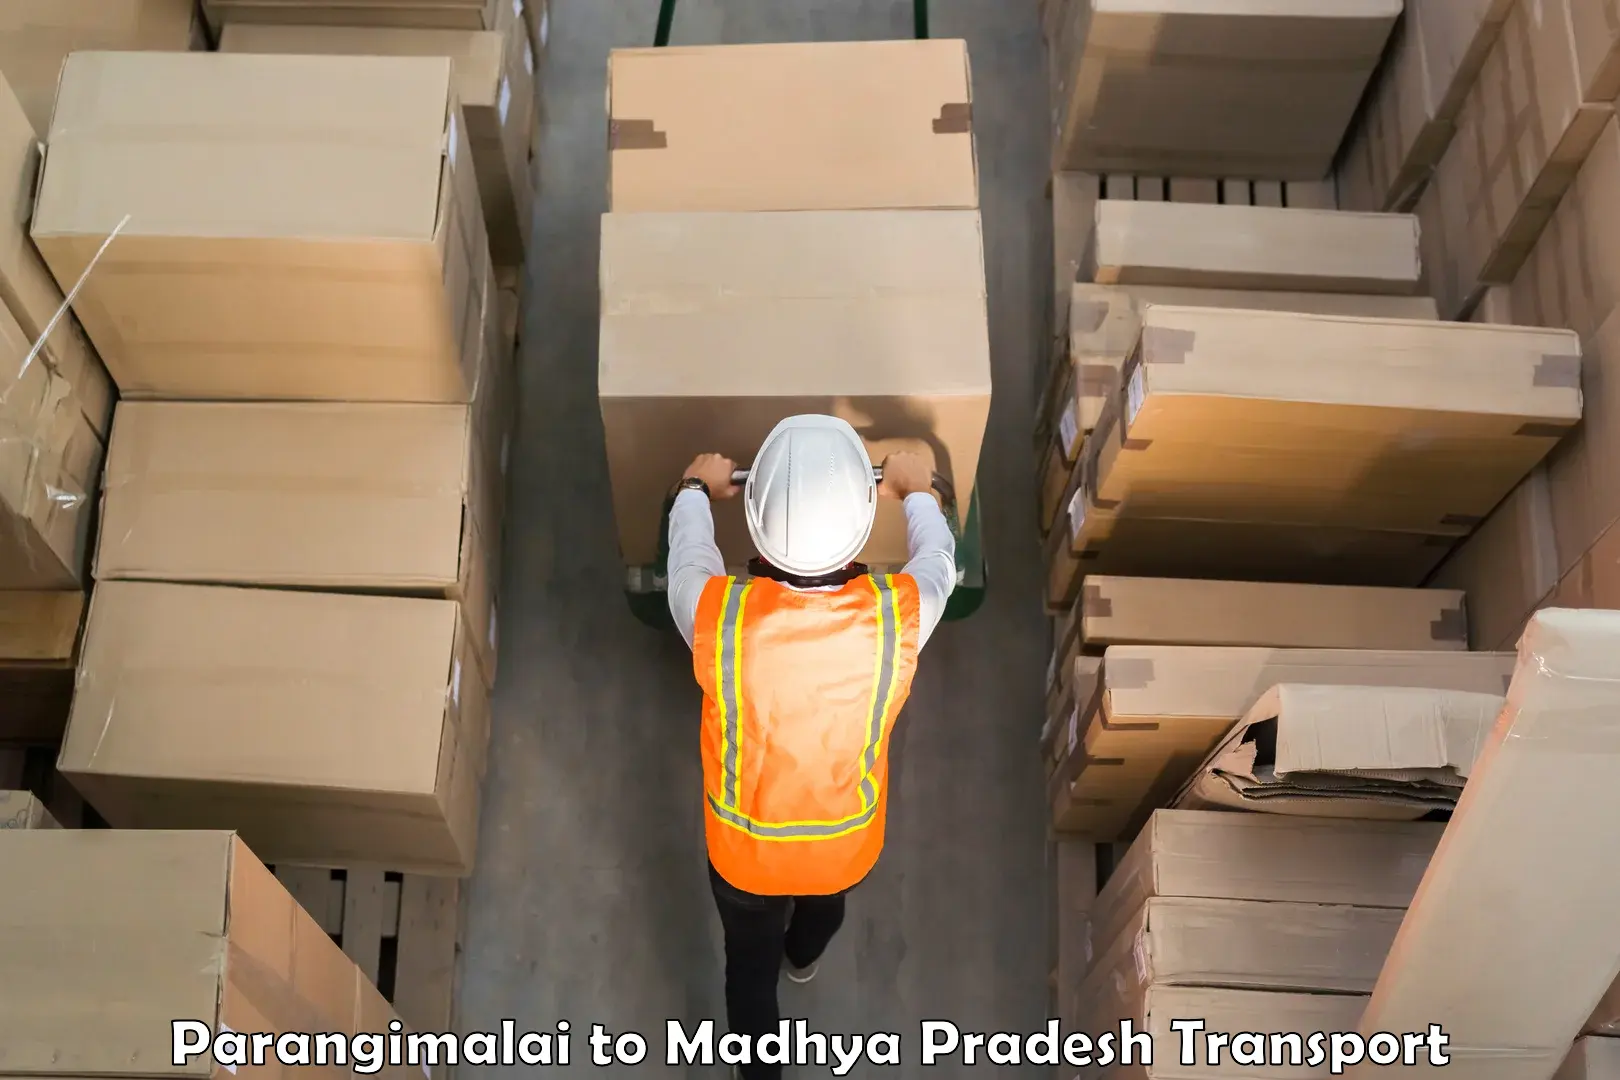 Goods delivery service Parangimalai to Harda